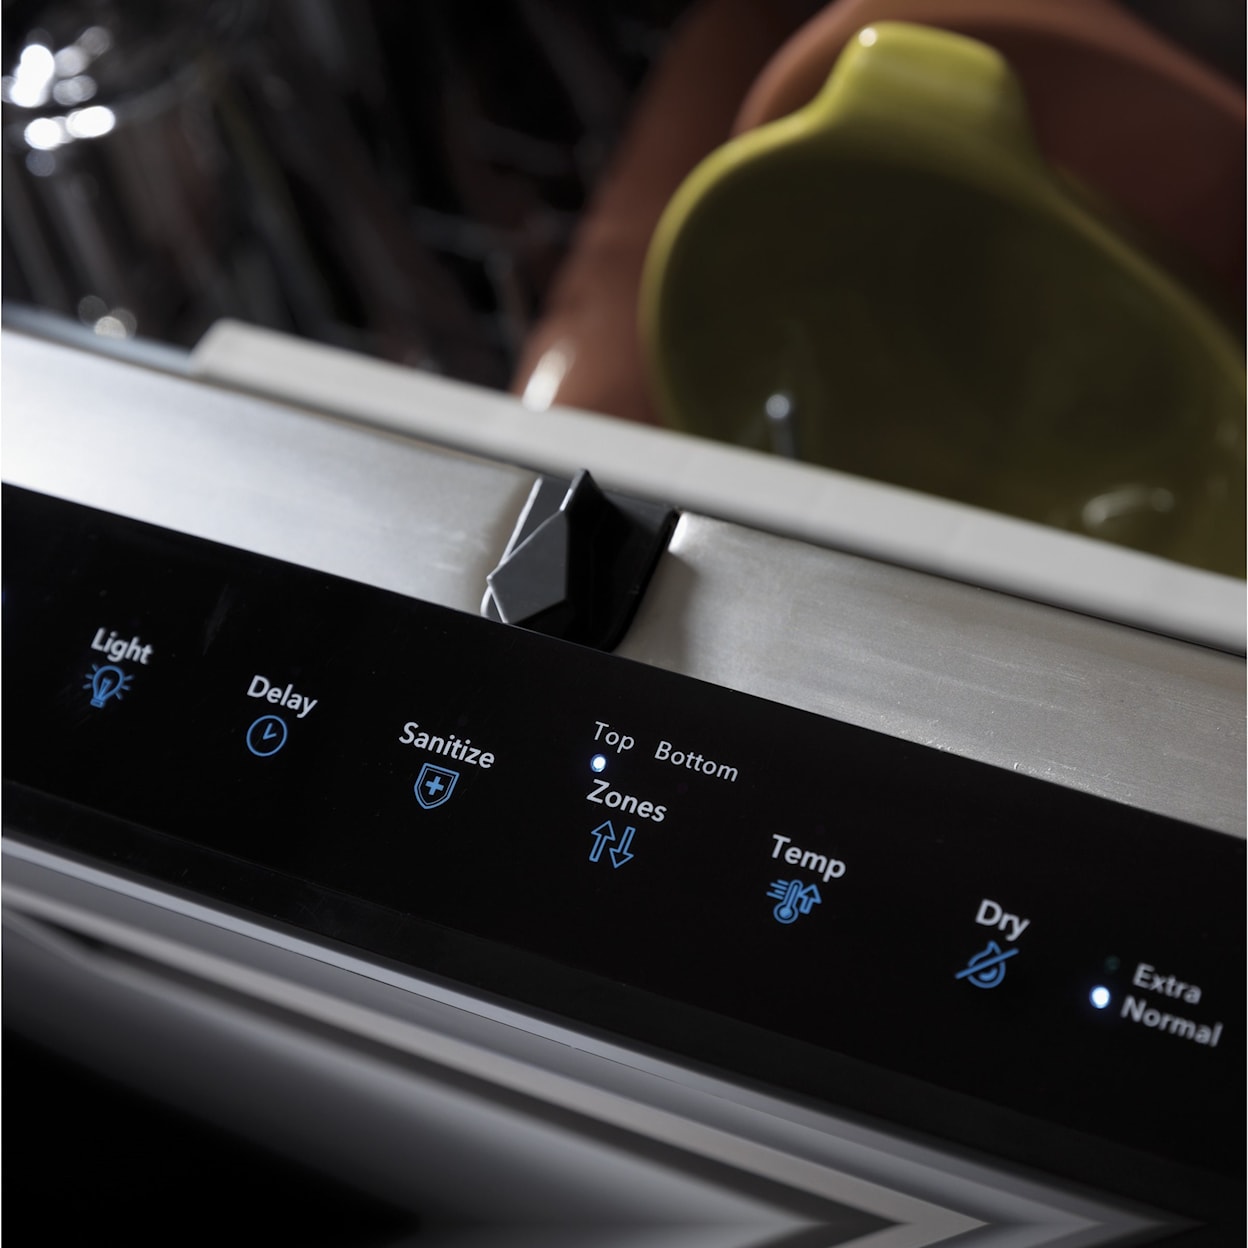 GE Appliances Dishwashers - GE Haier Smart Top Control Dishwasher